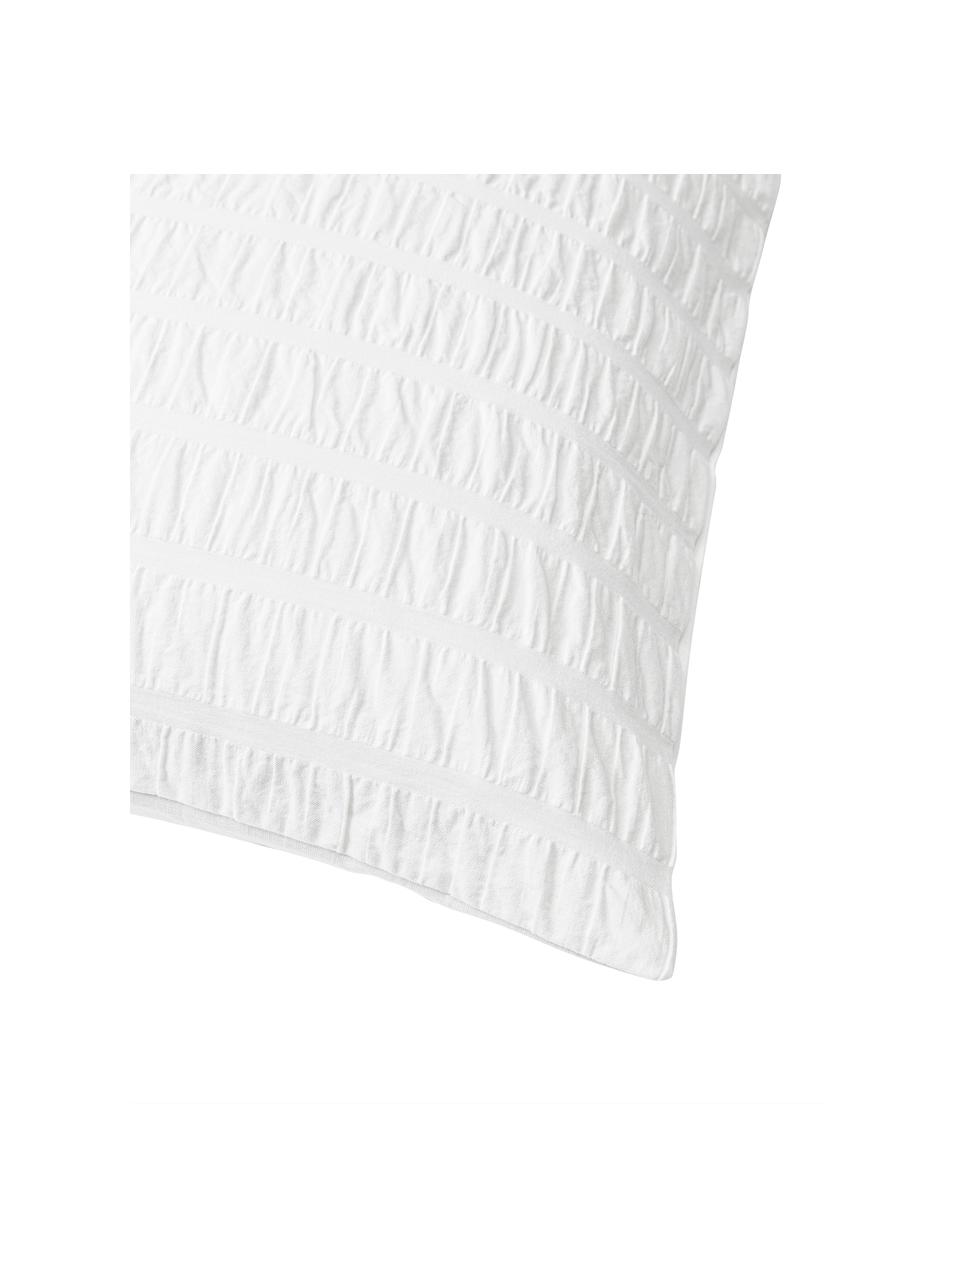 Federa arredo in cotone bianco Esme 2 pz, Retro: Renforcé Densità del filo, Bianco, Larg. 50 x Lung. 80 cm 2 pz